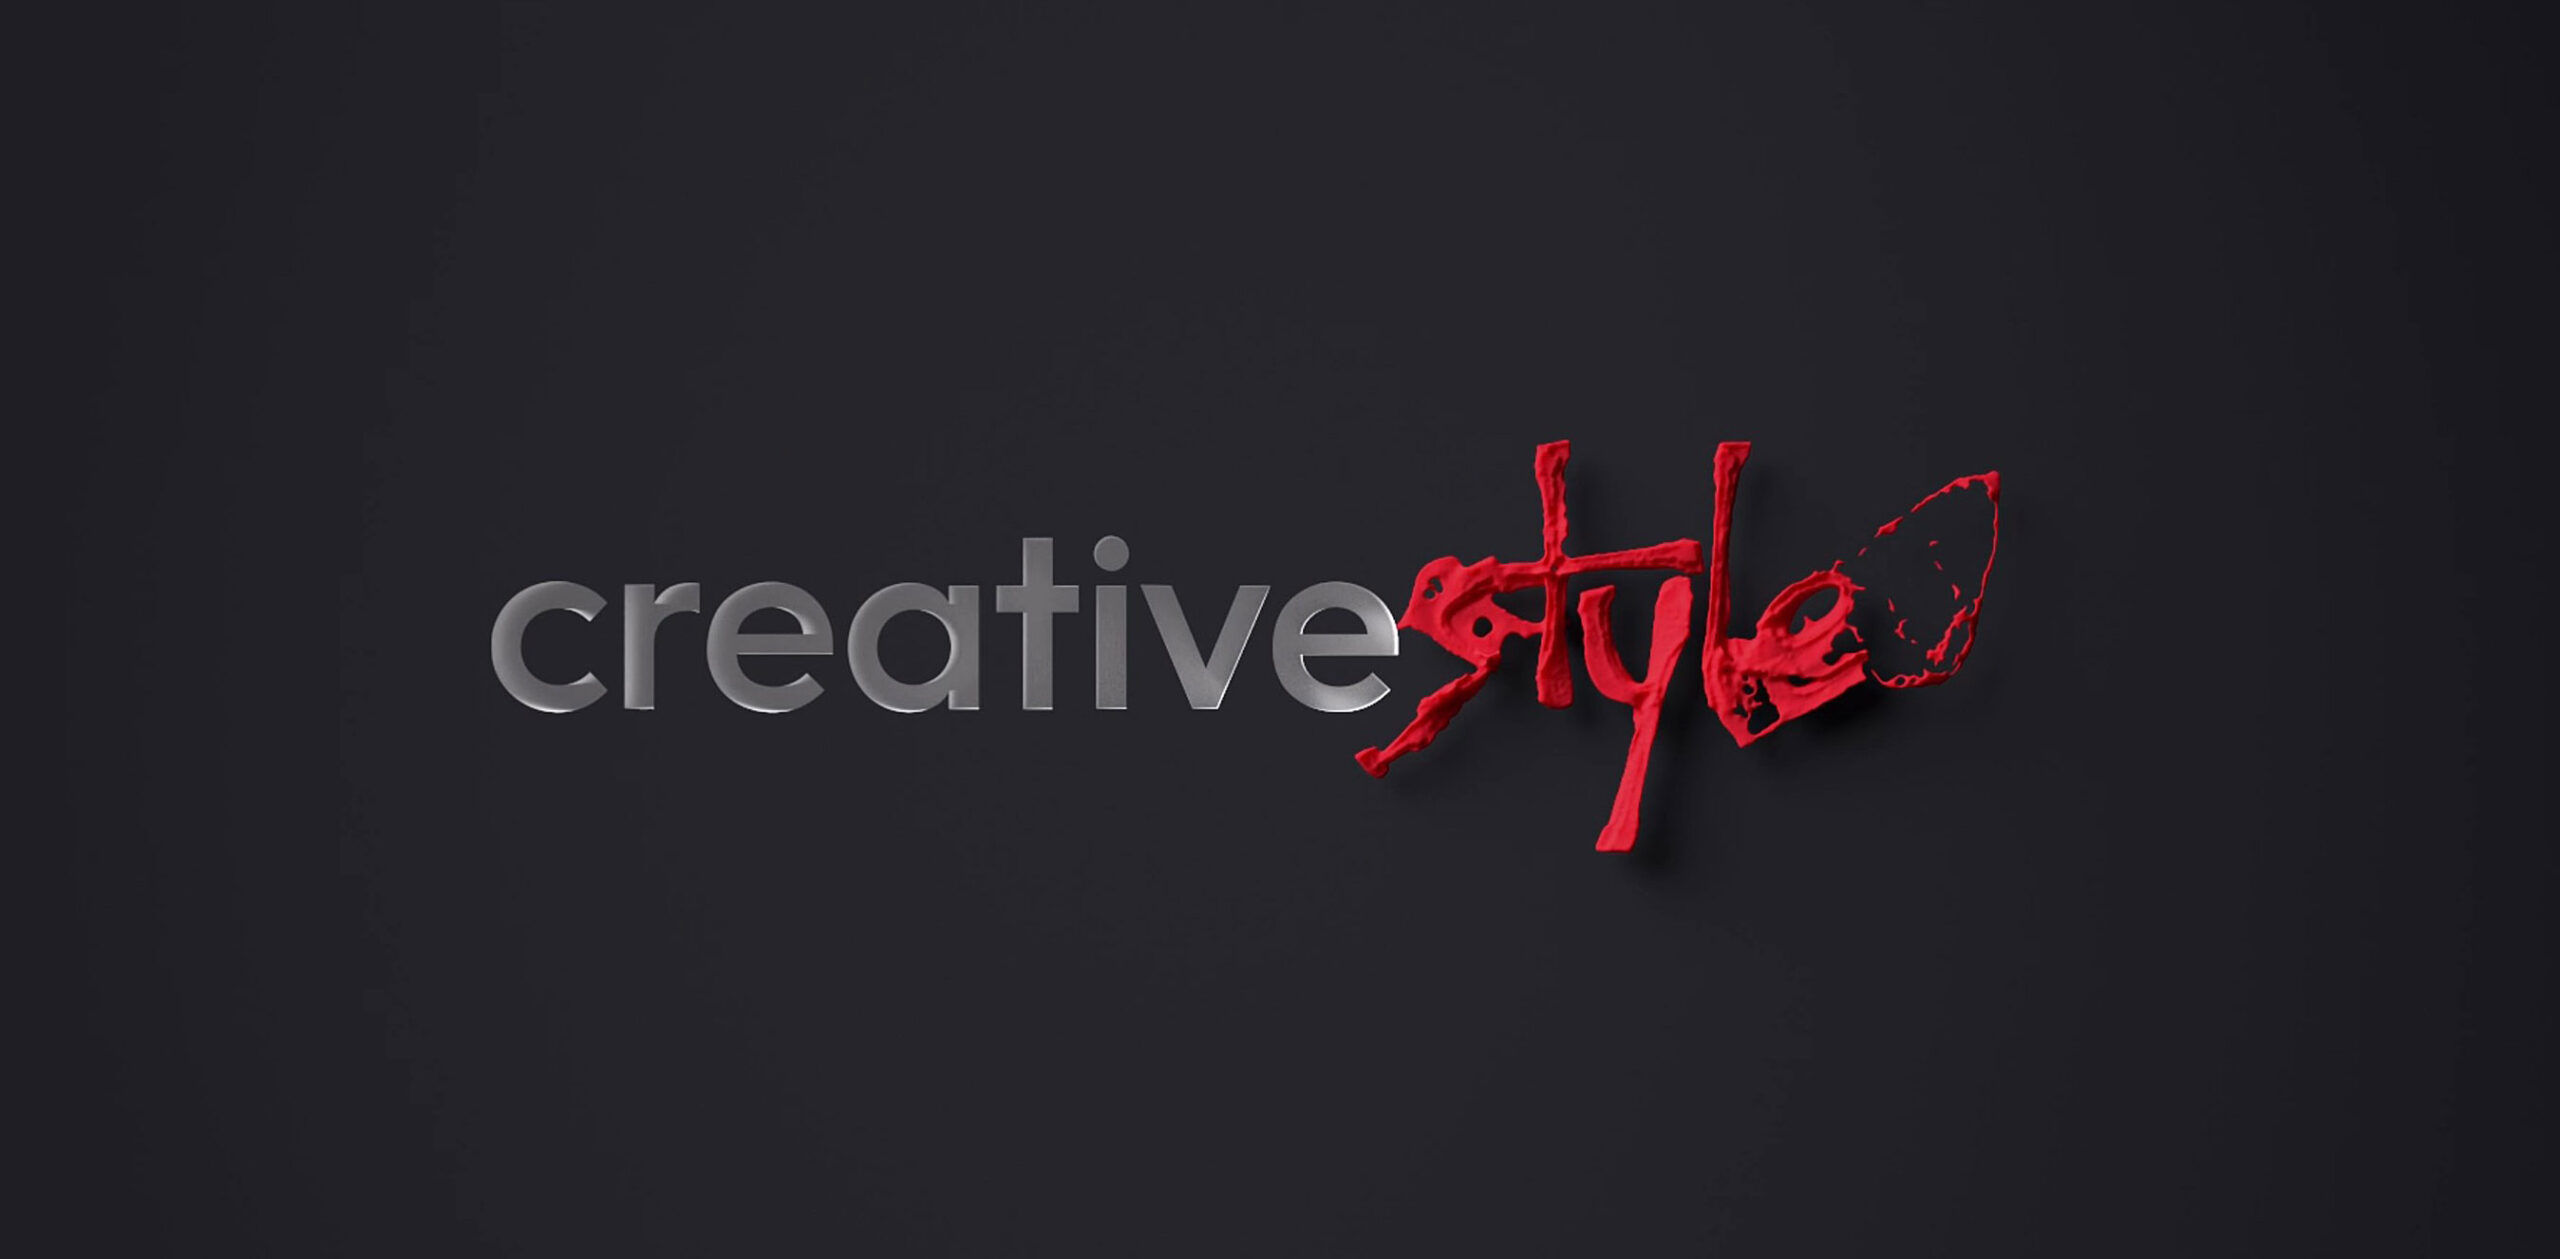 Motion Design 3D Logo creativestyle GmbH